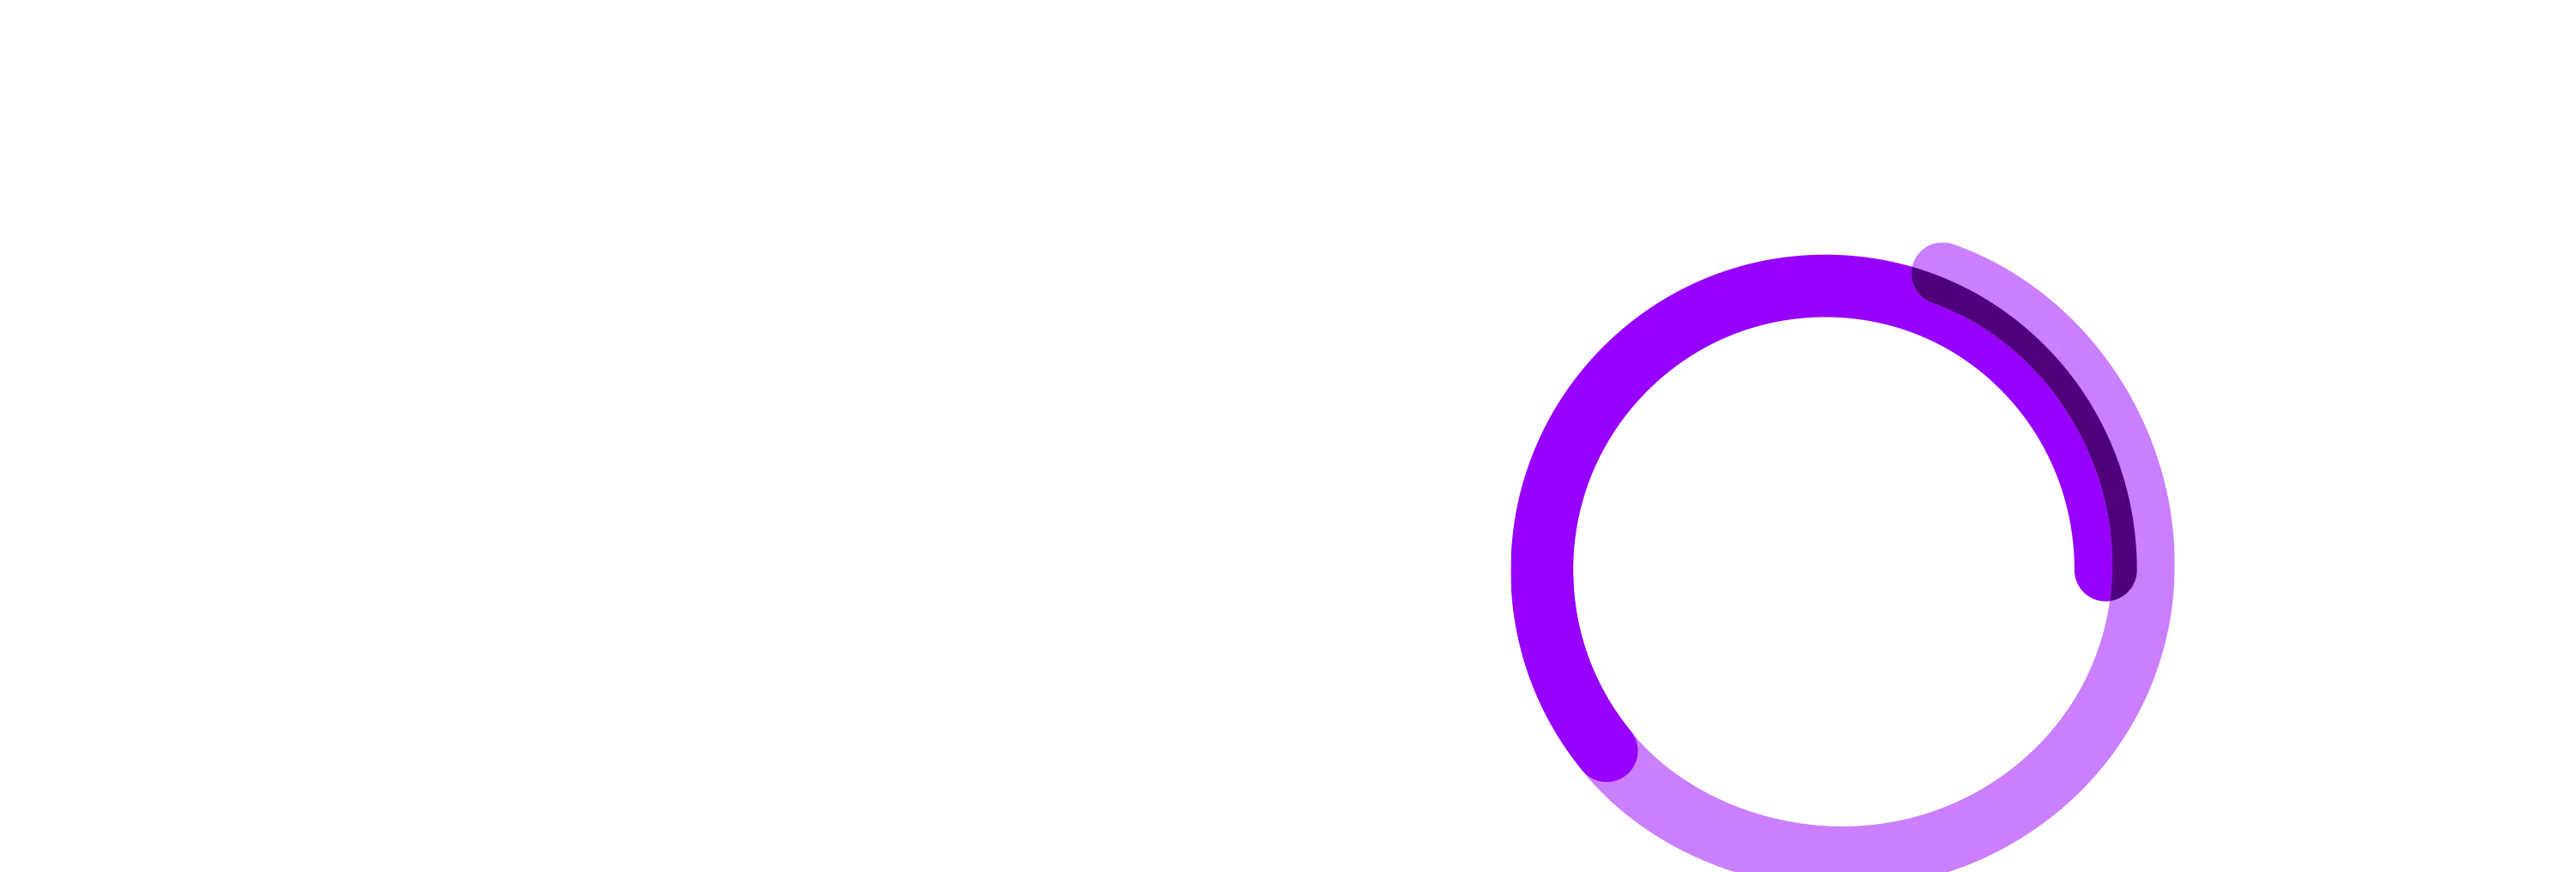 illustration purple circular 